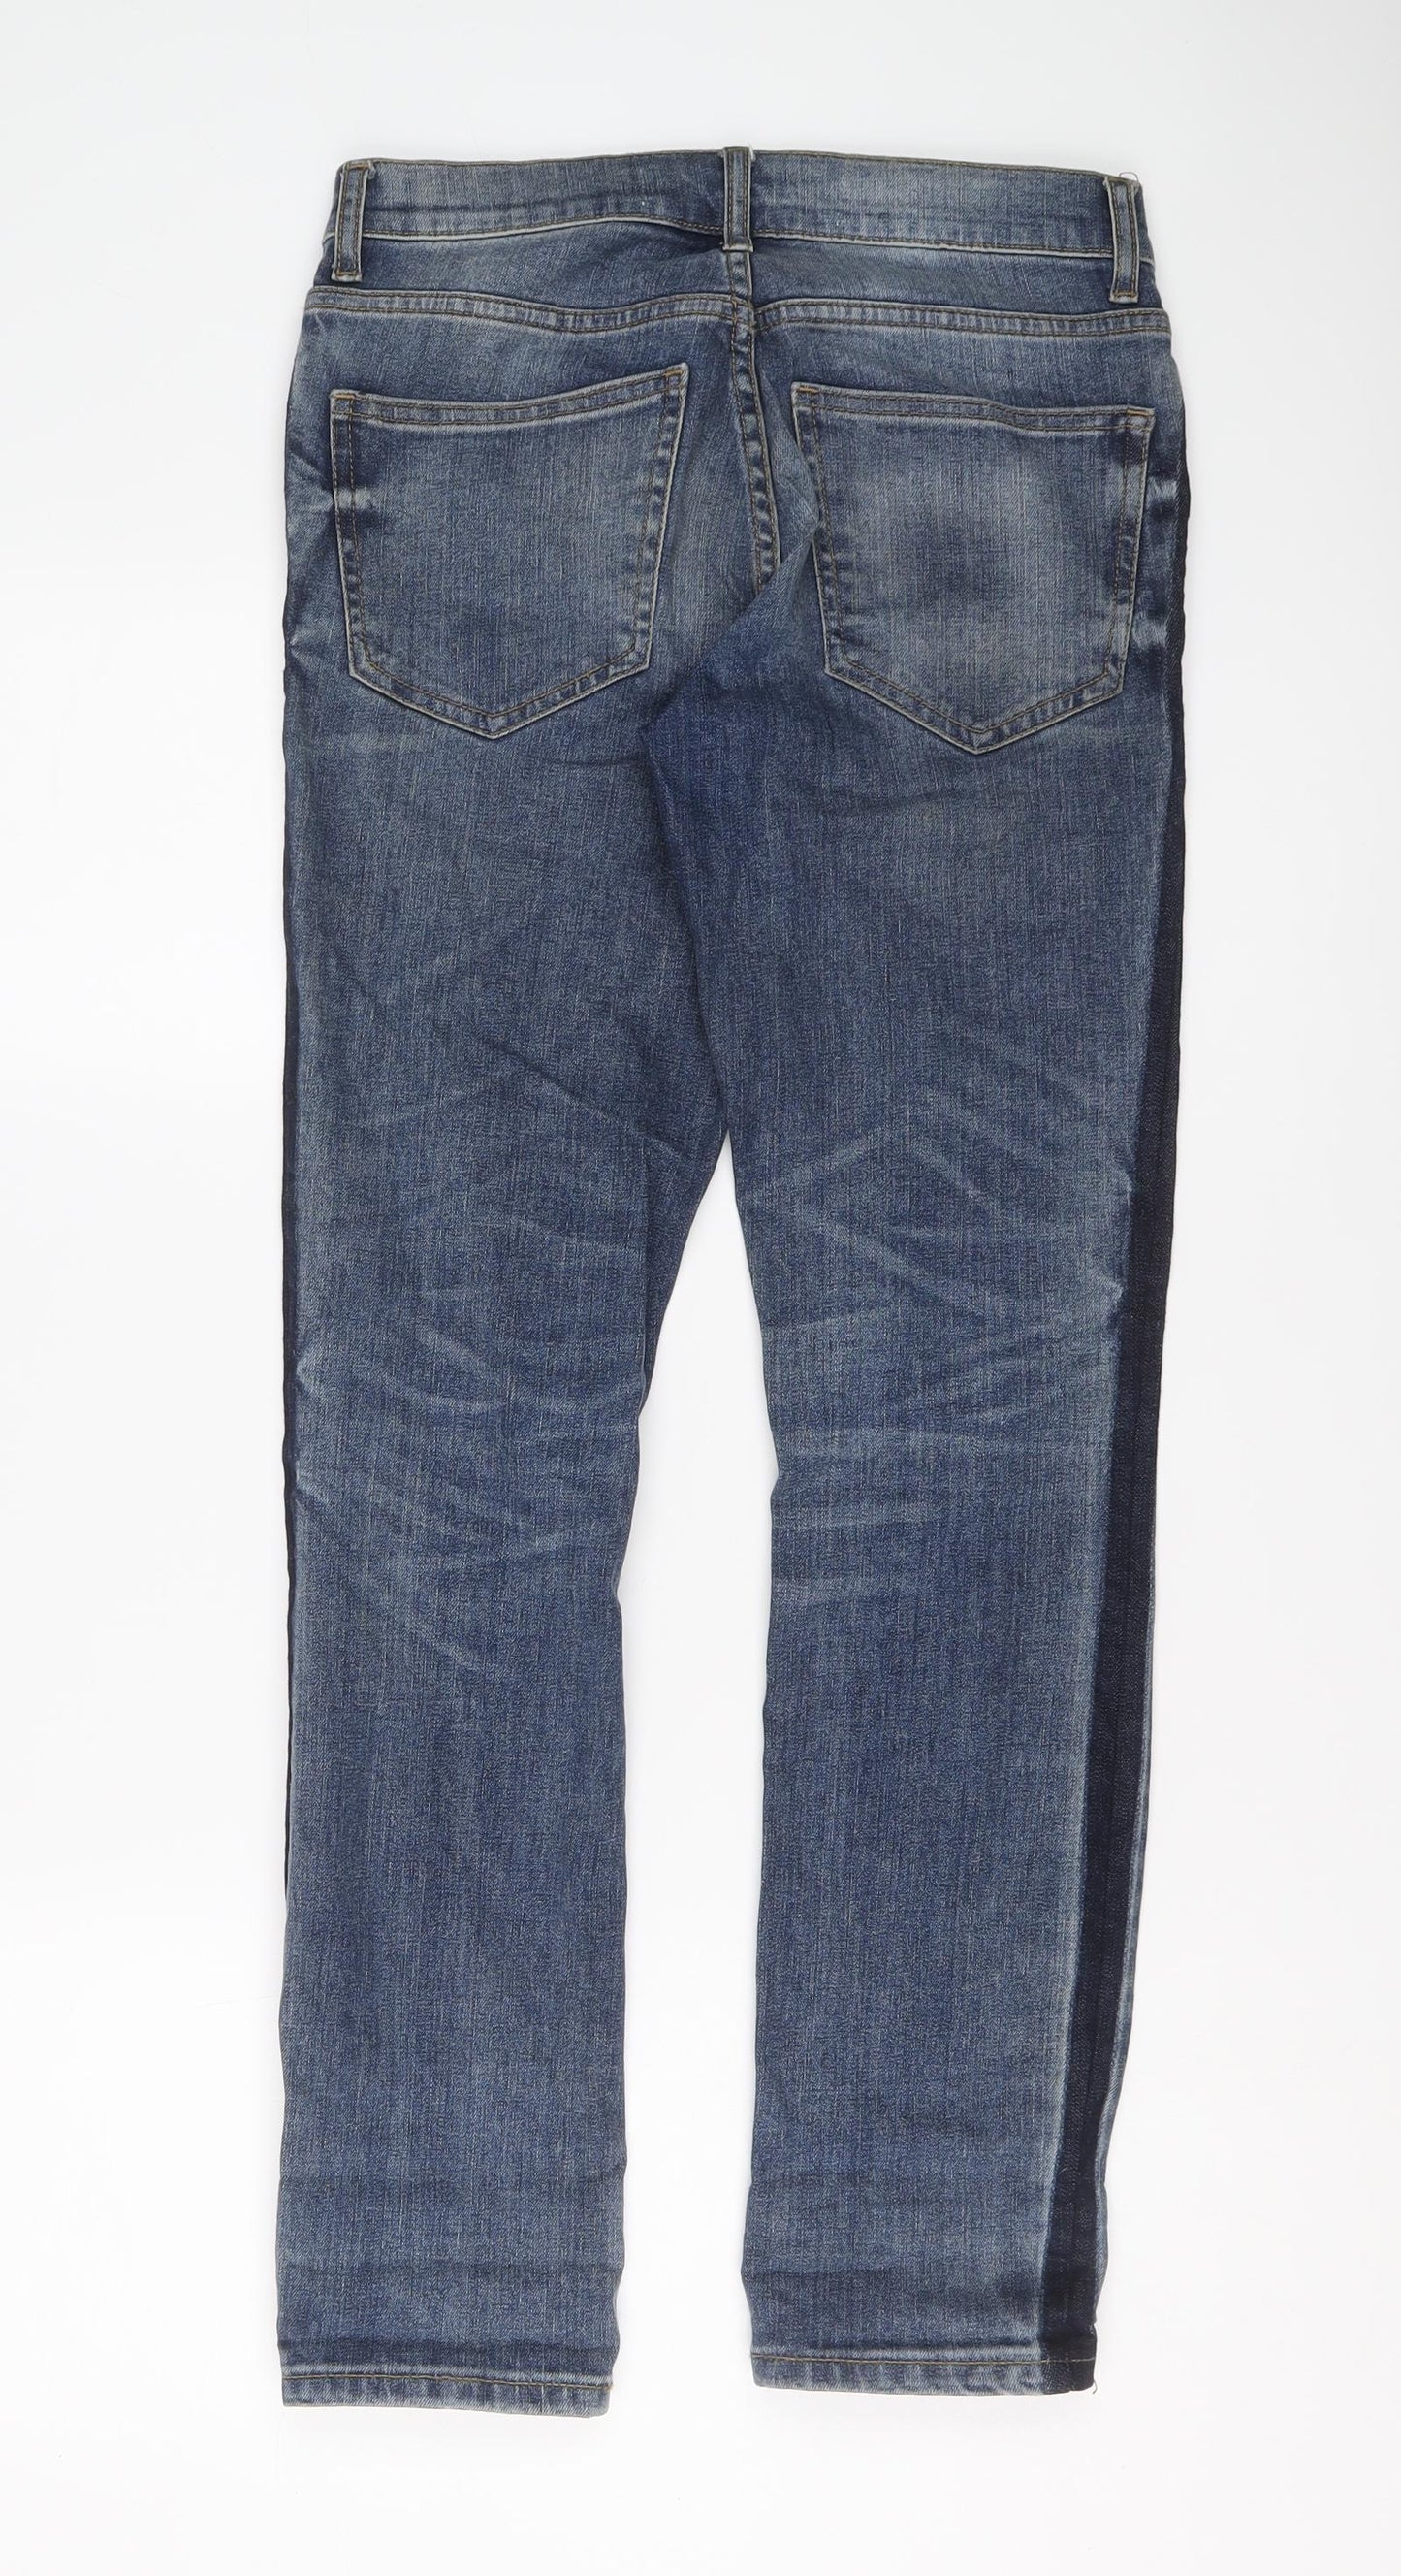 Burton Mens Blue Cotton Skinny Jeans Size 28 in L29 in Regular Button